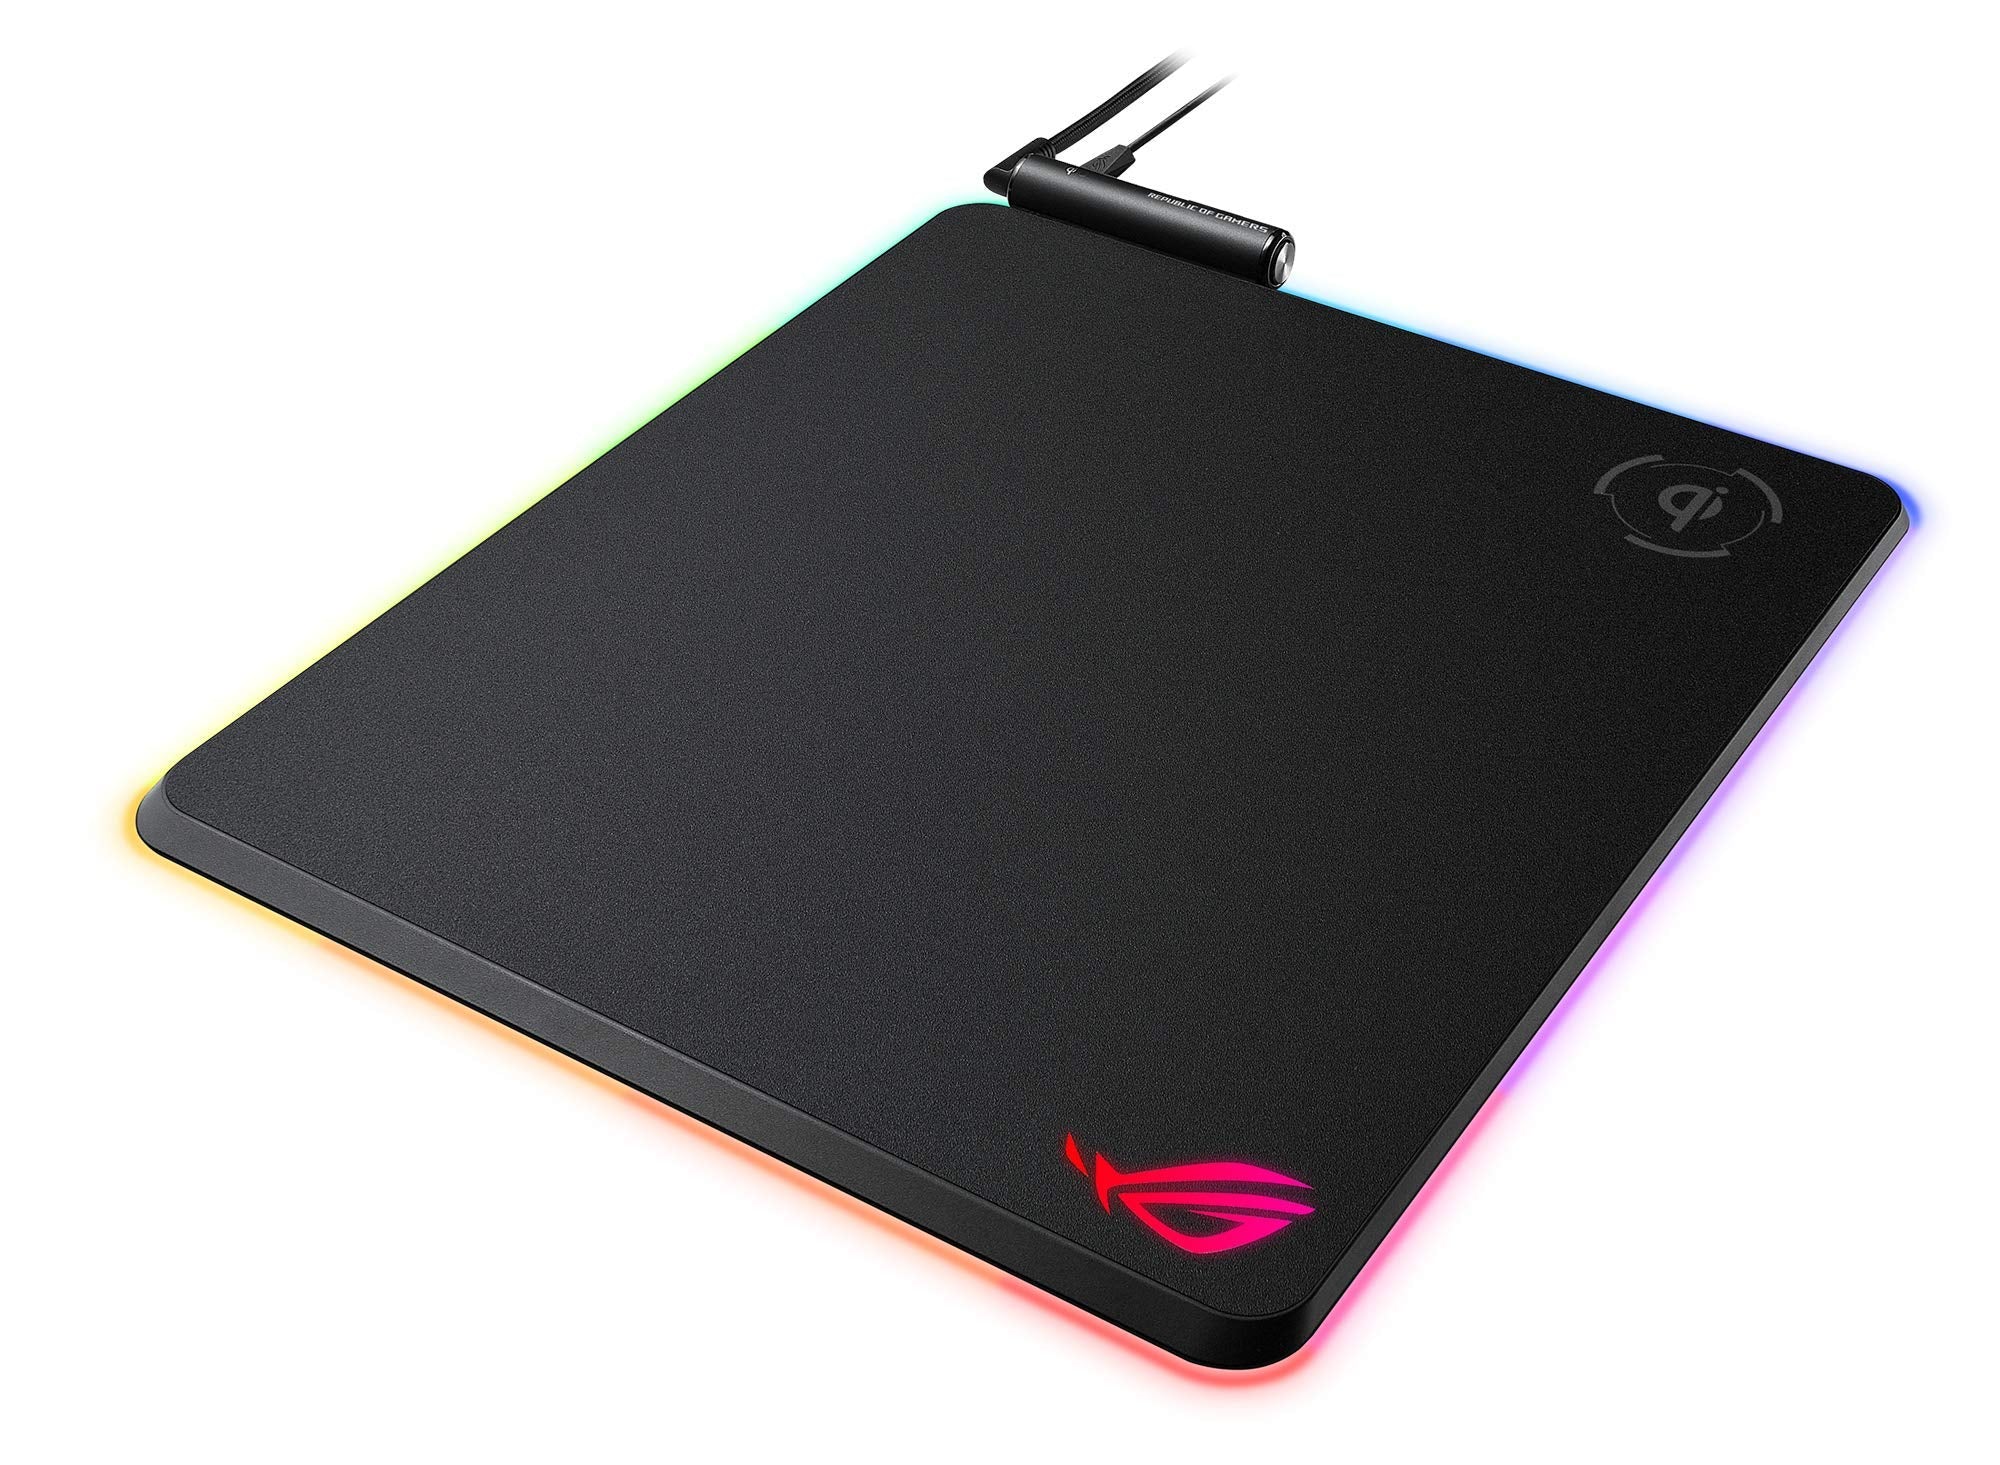 Asus ROG Balteus Non Qi Vertical Gaming Mouse Pad